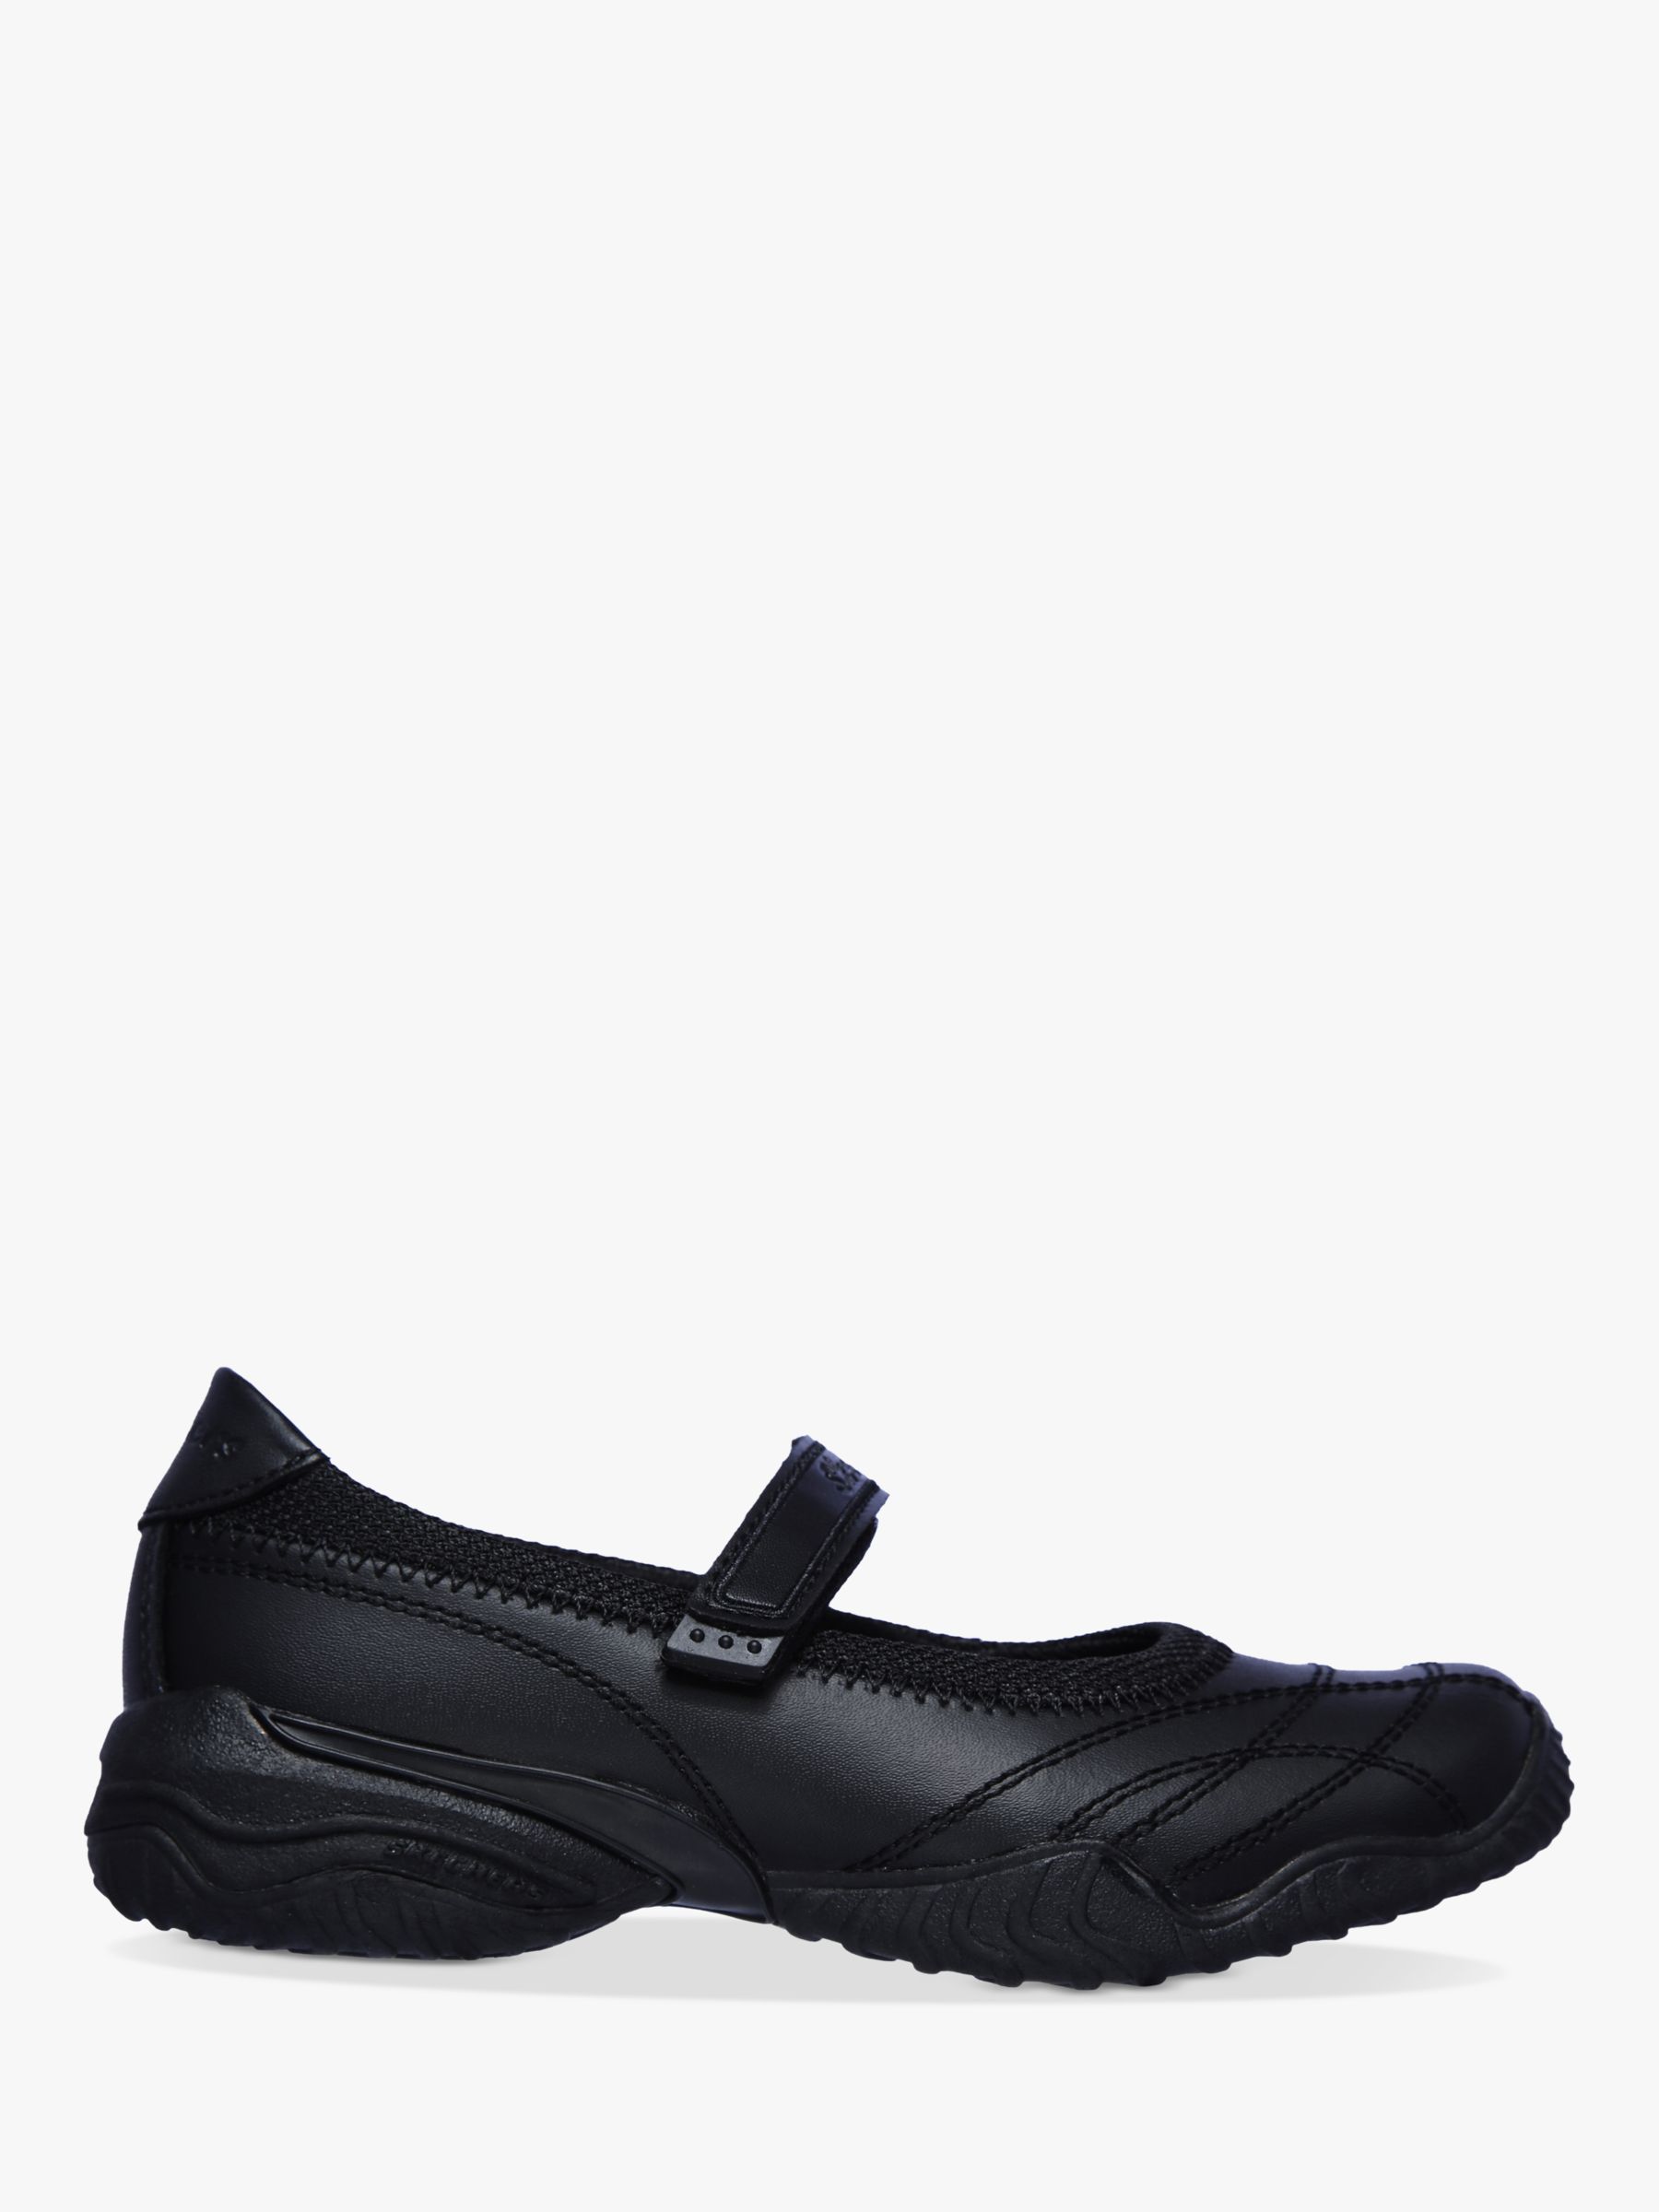 Skechers Kids' Velocity Pouty School Shoes, Black, 28